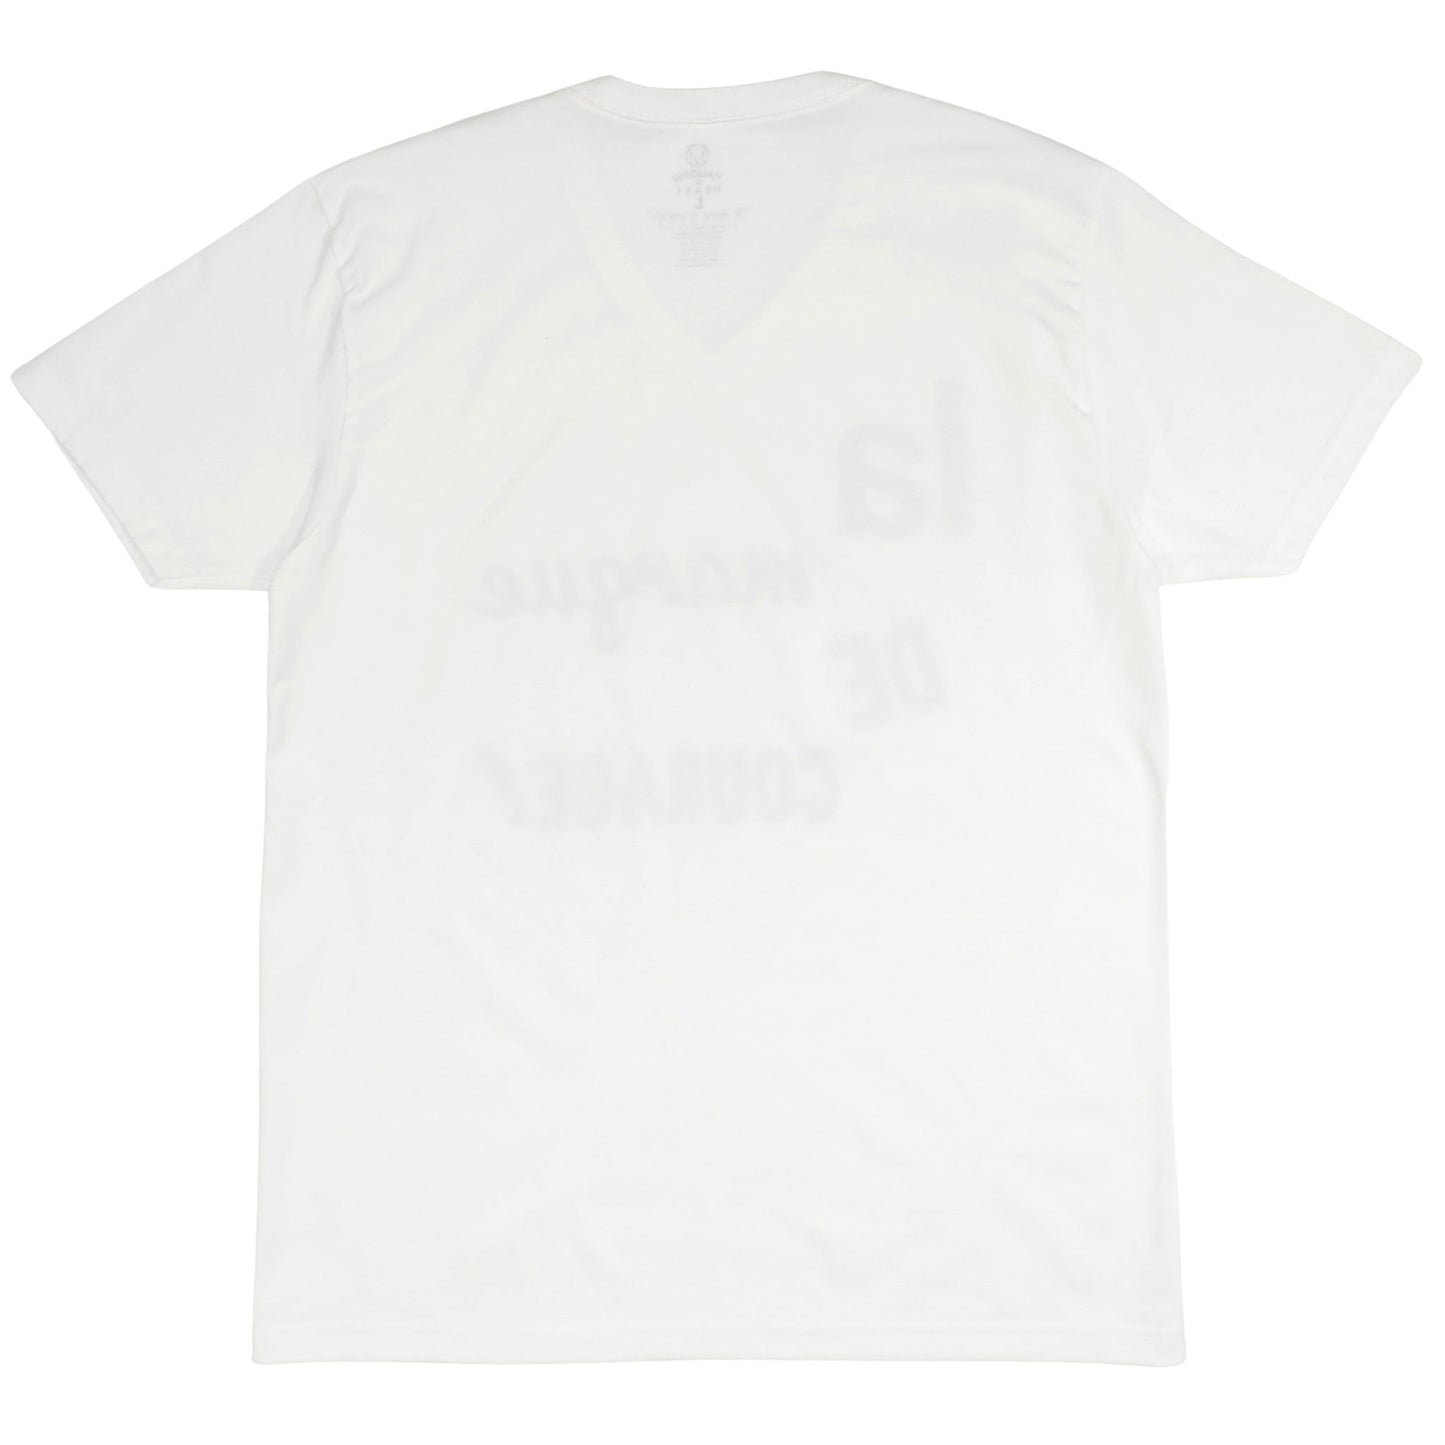 Women's - La Marque de Courage White V-Neck T-Shirt-Vaughn de Heart